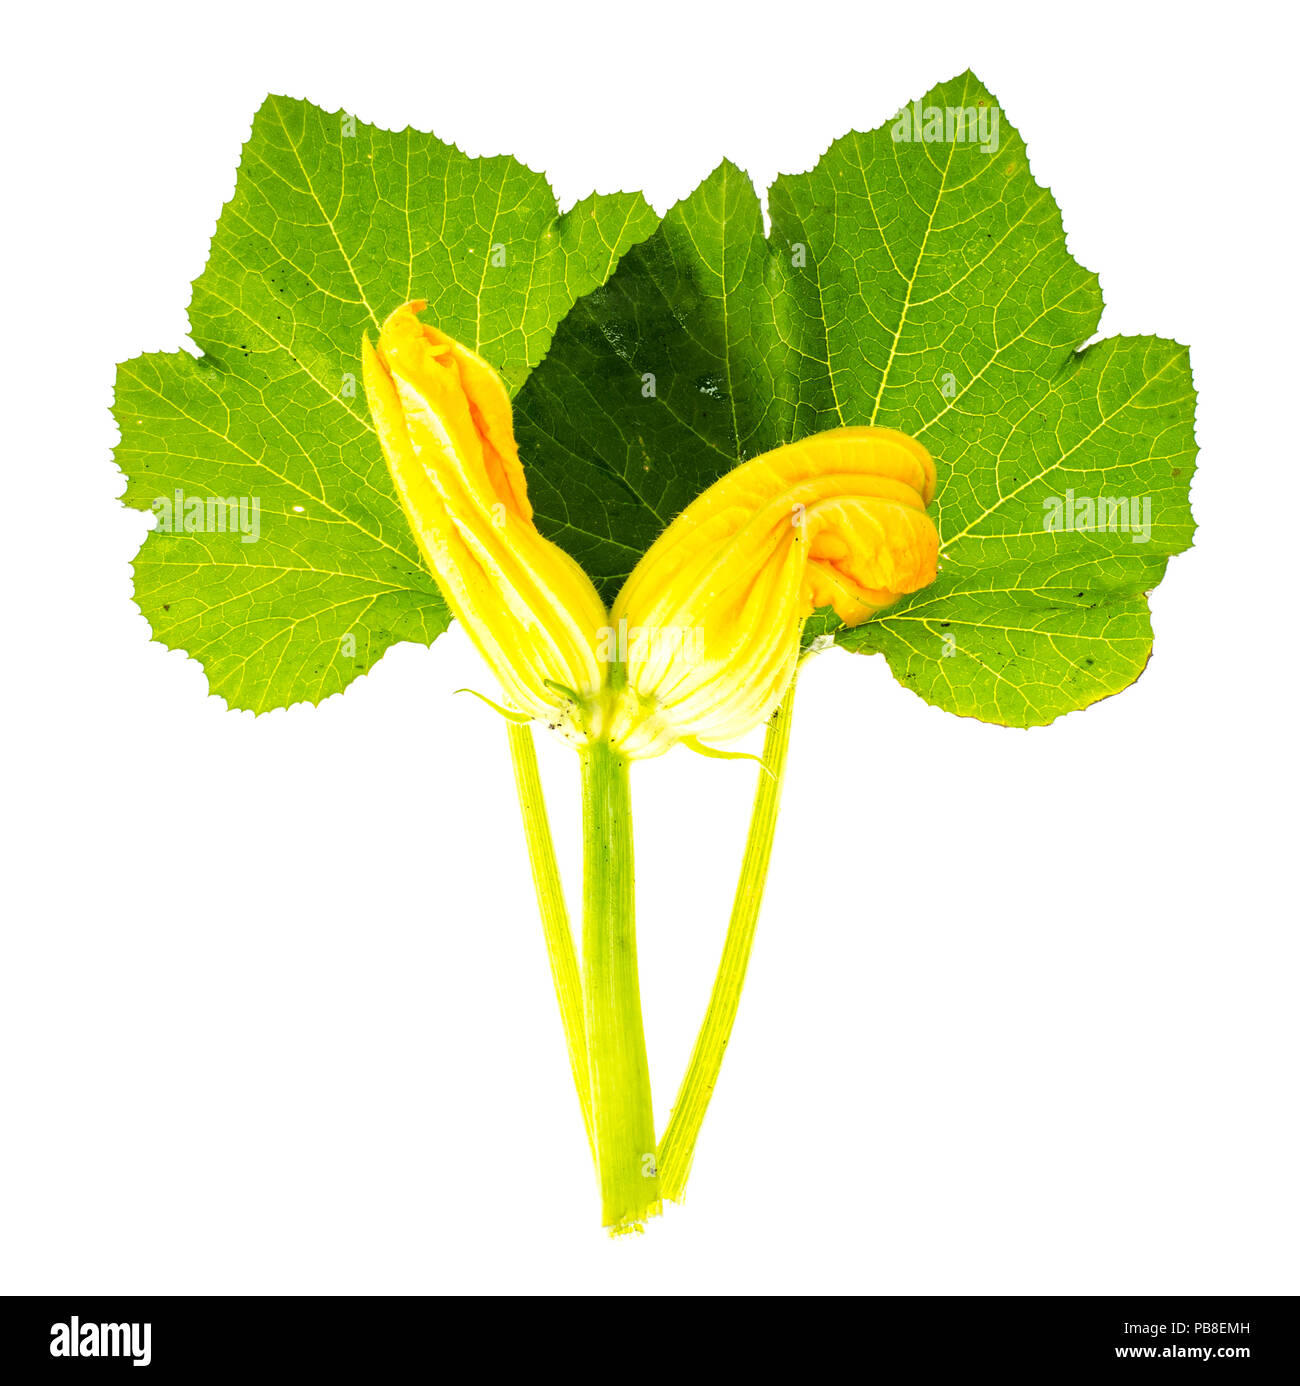 Leaves and flower of zucchini. Studio Photo Stock Photo